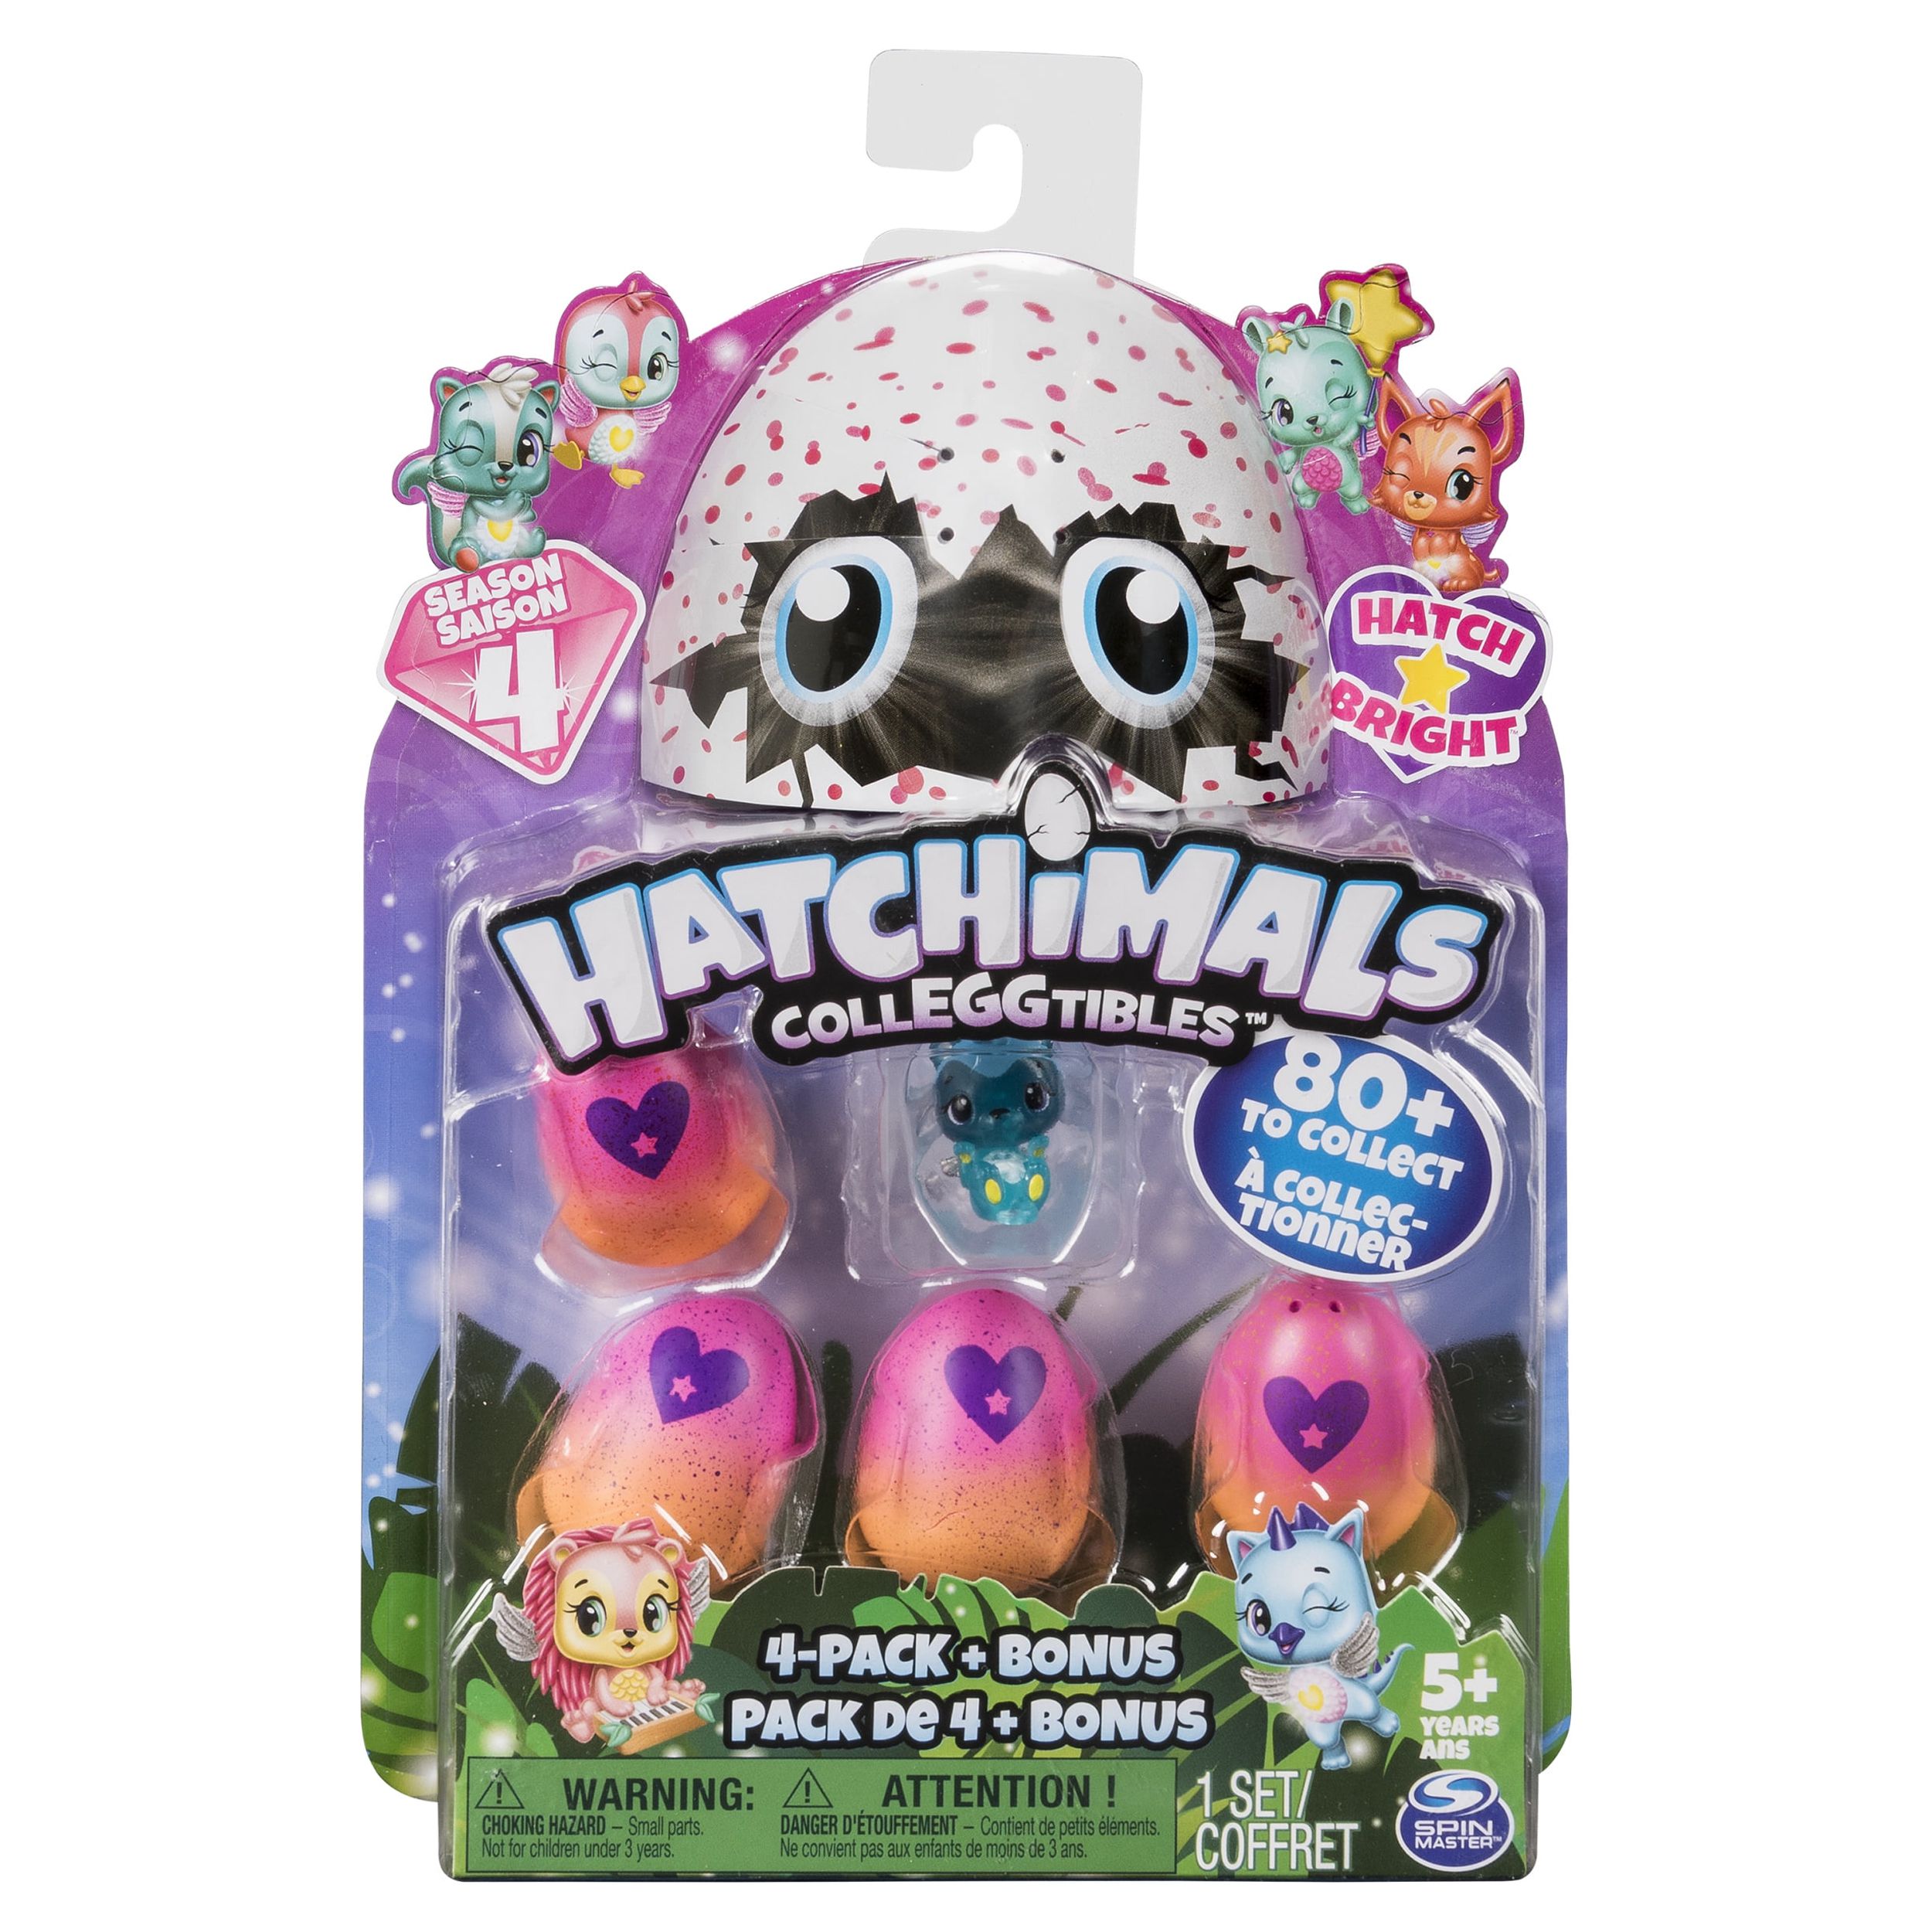 Hatchimals CollEGGtibles, 4 Pack + Bonus, Season 4 Hatchimals CollEGGtible, for Ages 5 and up (Styles and Colors May Vary) - image 1 of 7